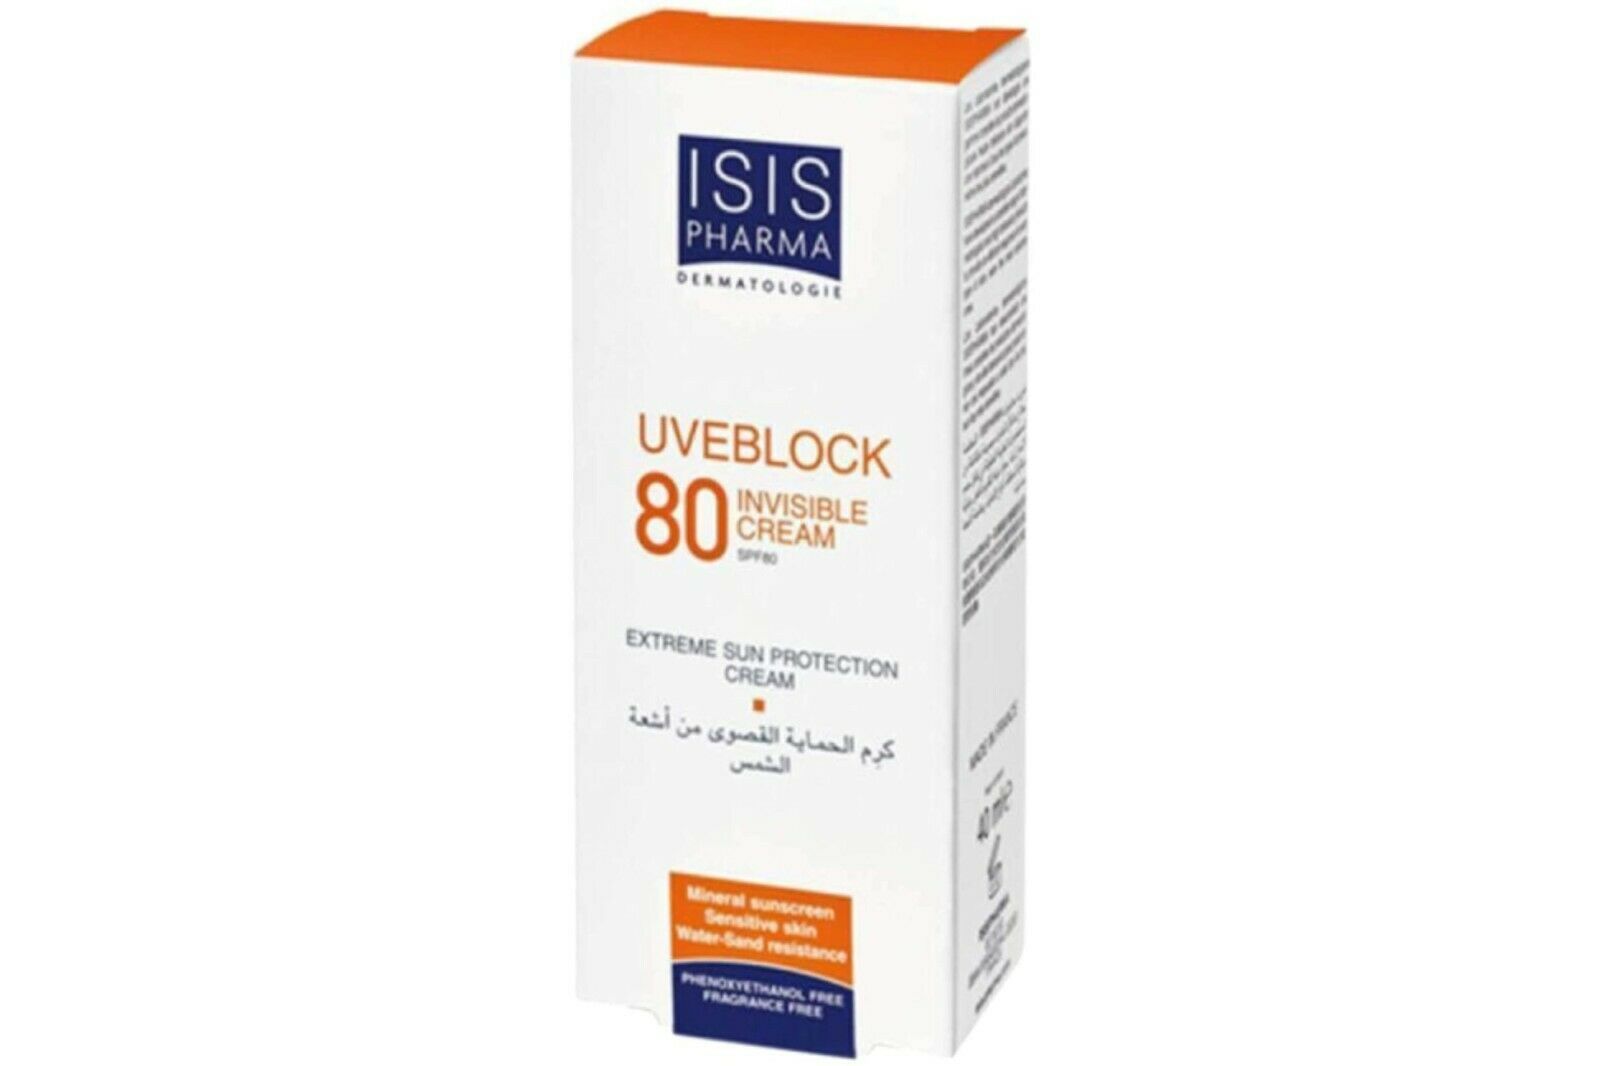 40ml. ISIS Pharma UVEBlOCK 80 Invisible Cream